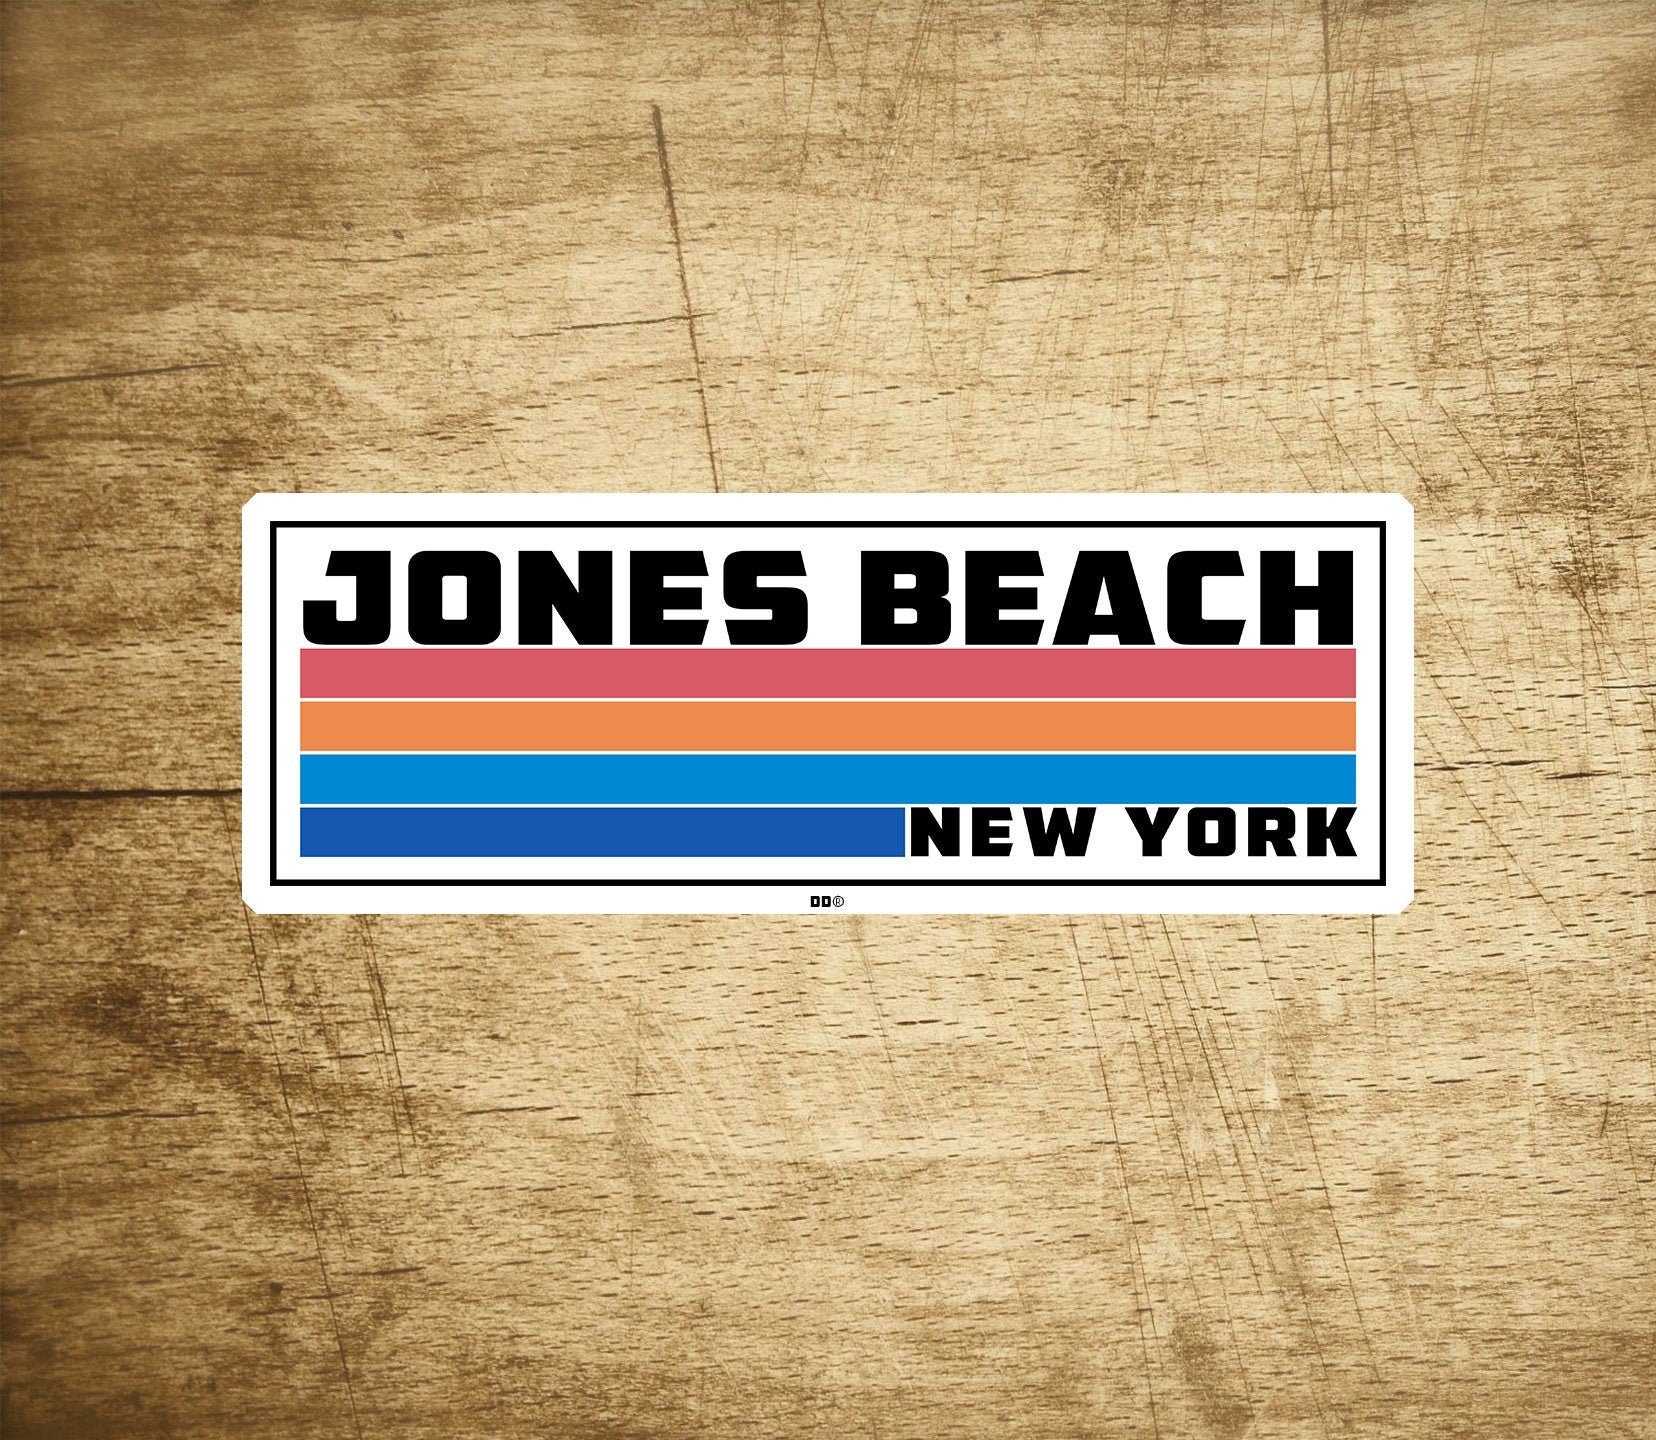 Jones Beach New York Sticker Decal Vinyl 3.75" x 1.4" Long Island